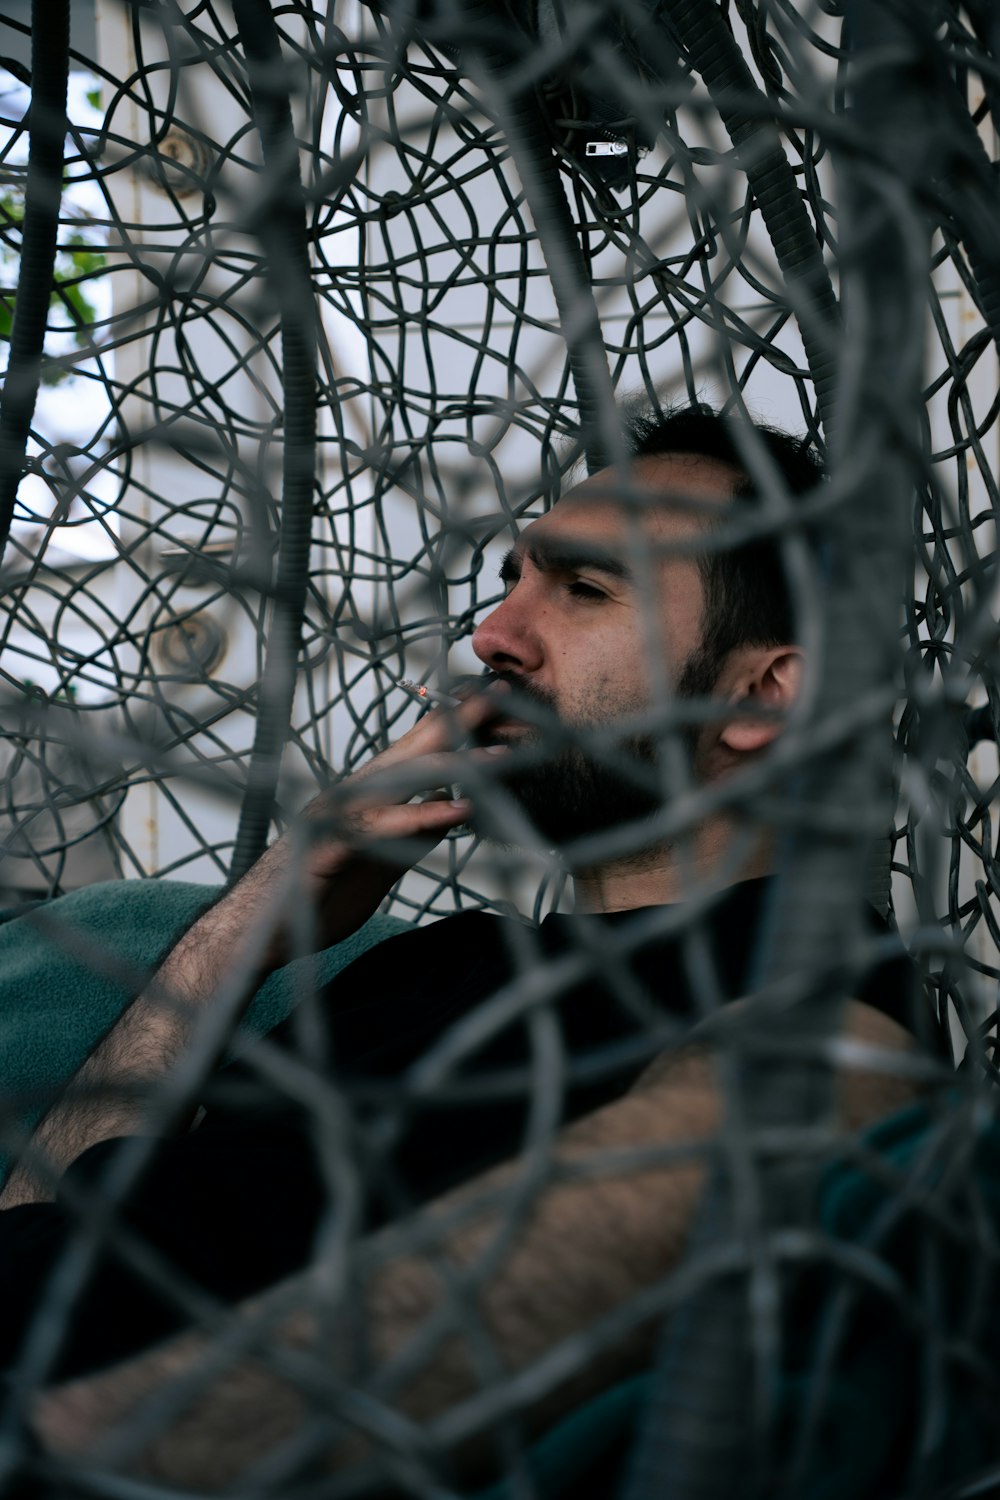 a man sitting in a chair behind a net